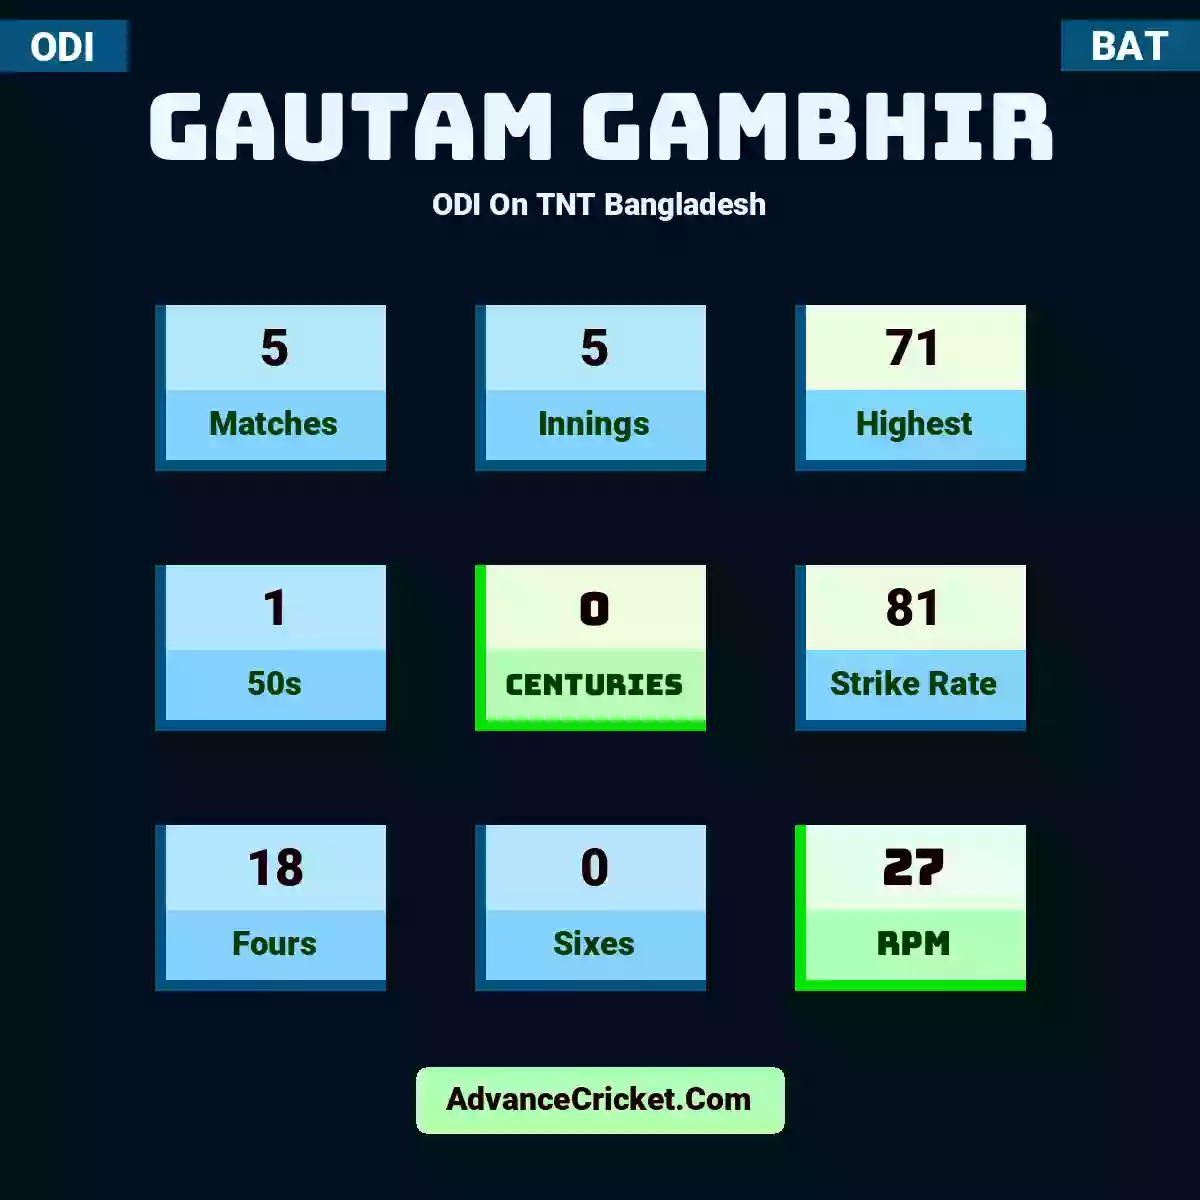 Gautam Gambhir ODI  On TNT Bangladesh, Gautam Gambhir played 5 matches, scored 71 runs as highest, 1 half-centuries, and 0 centuries, with a strike rate of 81. G.Gambhir hit 18 fours and 0 sixes, with an RPM of 27.